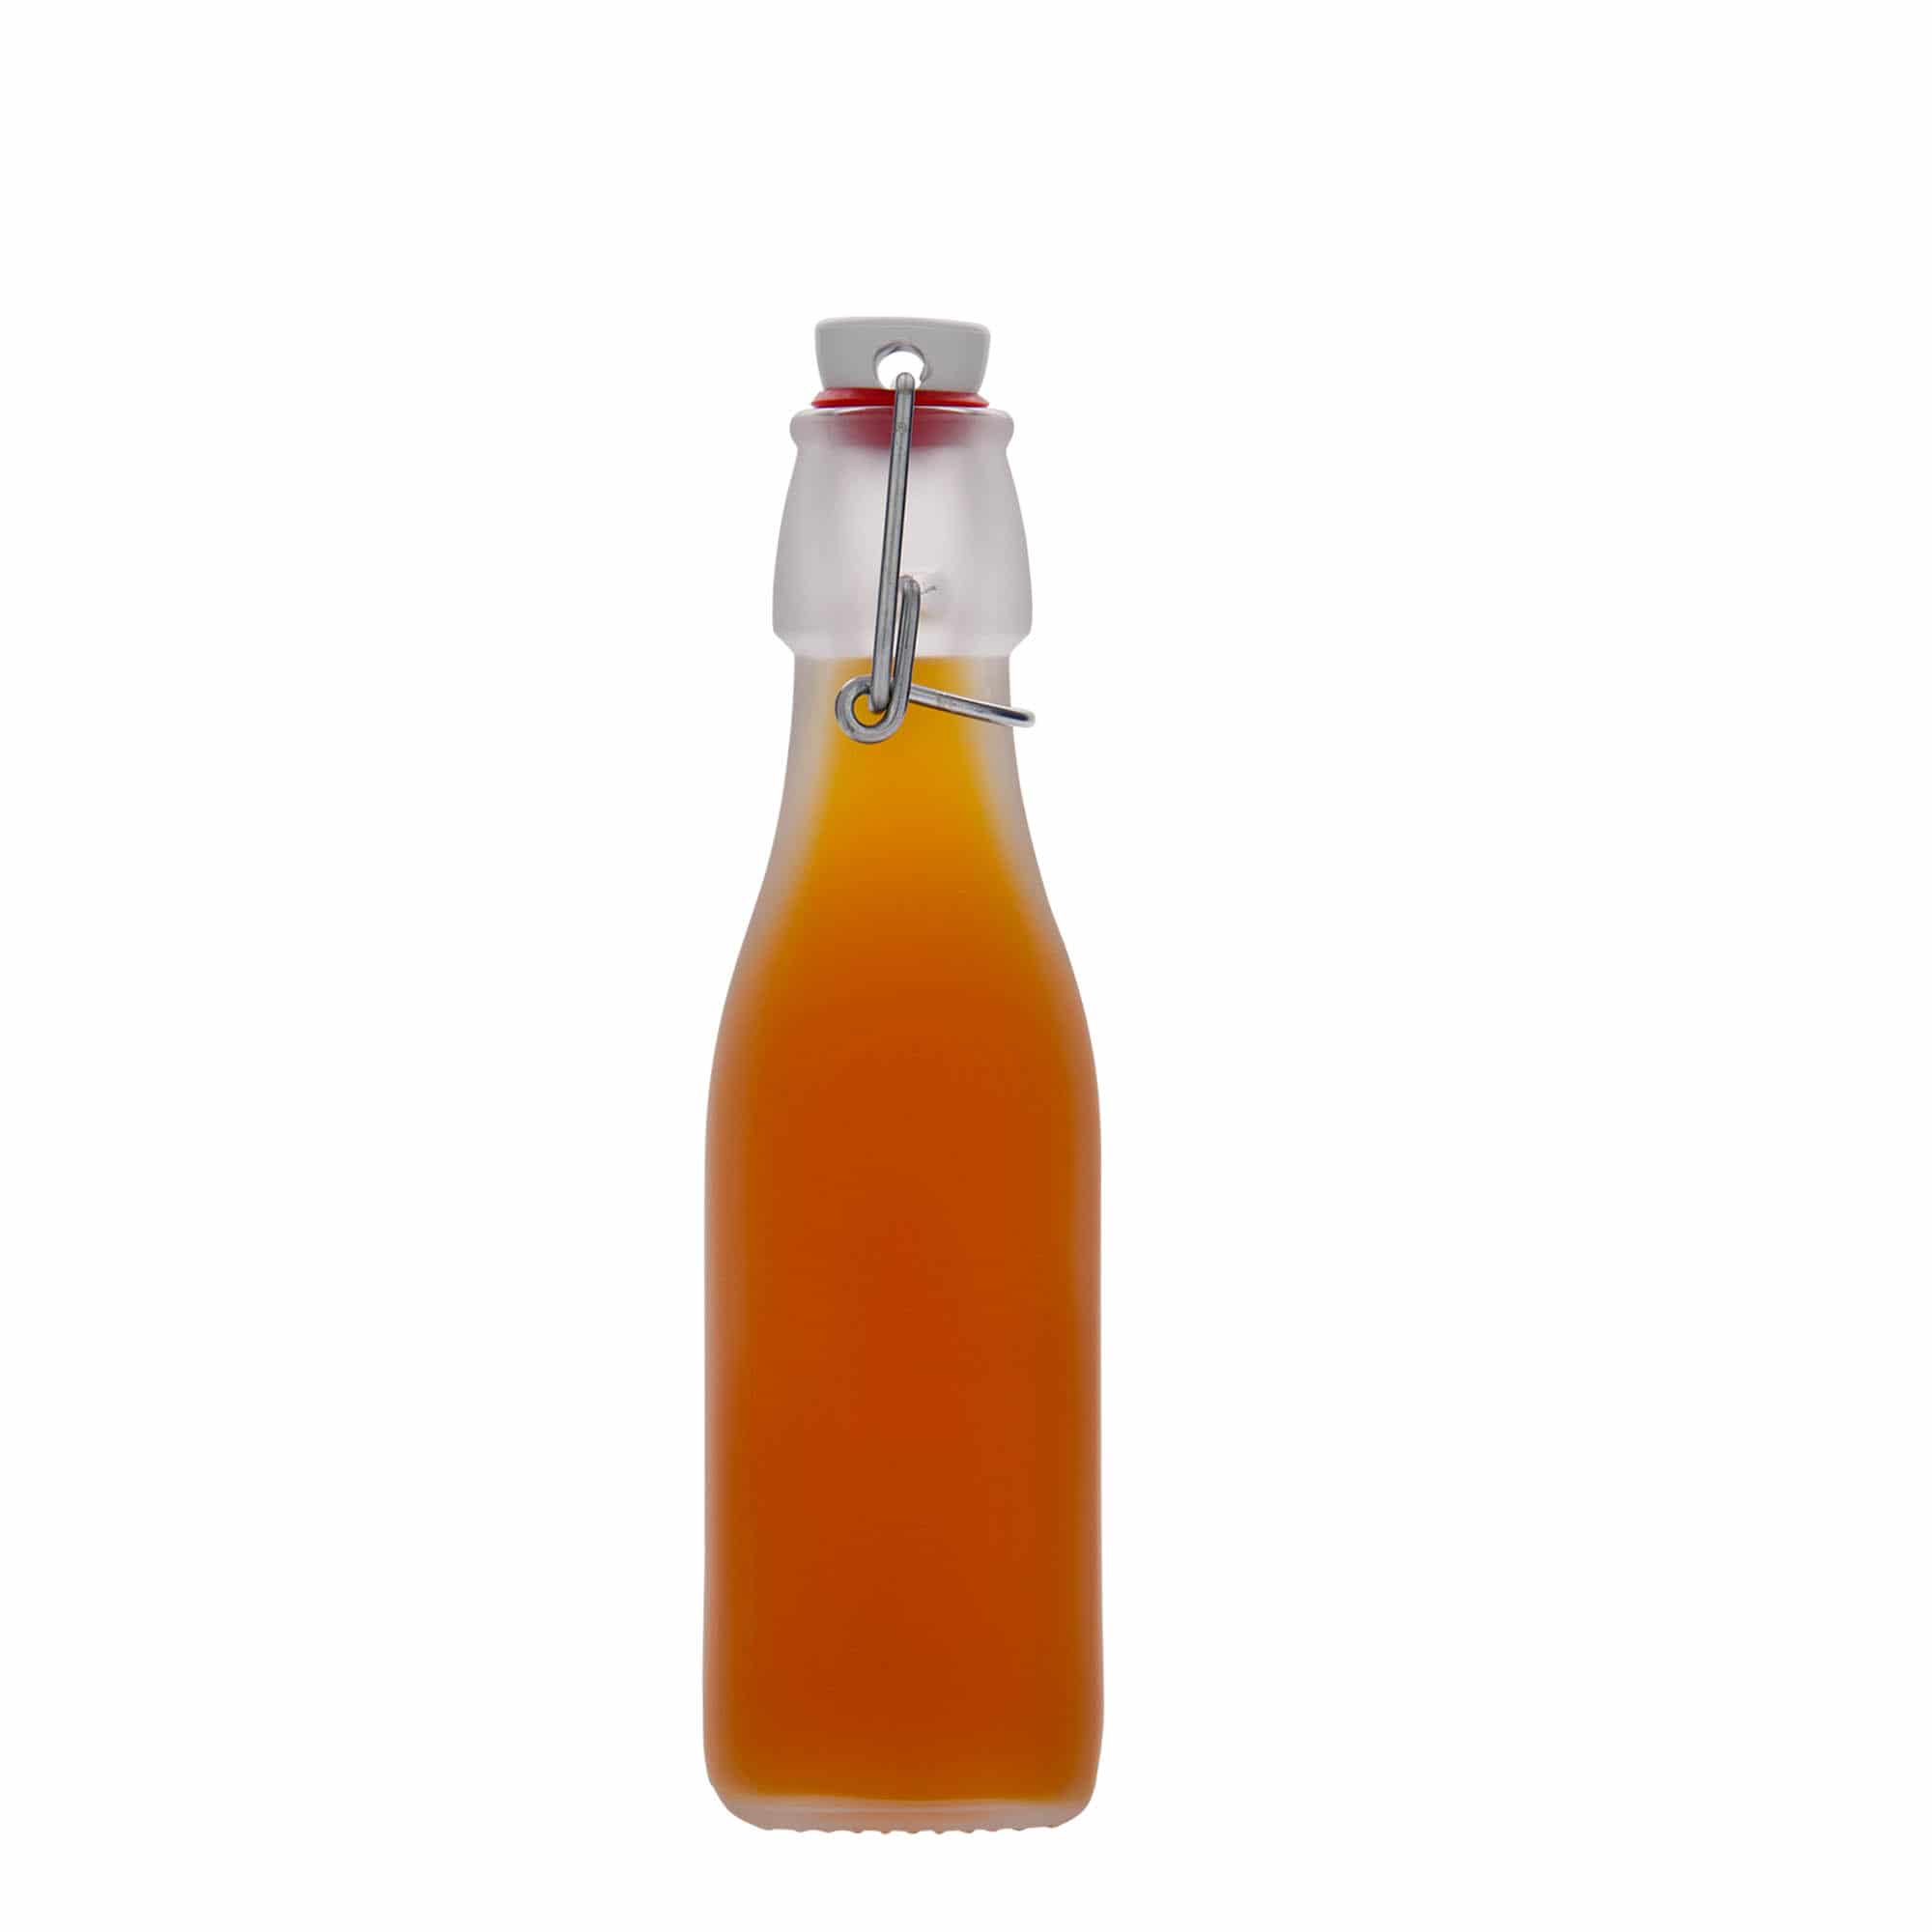 250 ml glass bottle 'Swing', square, white, closure: swing top